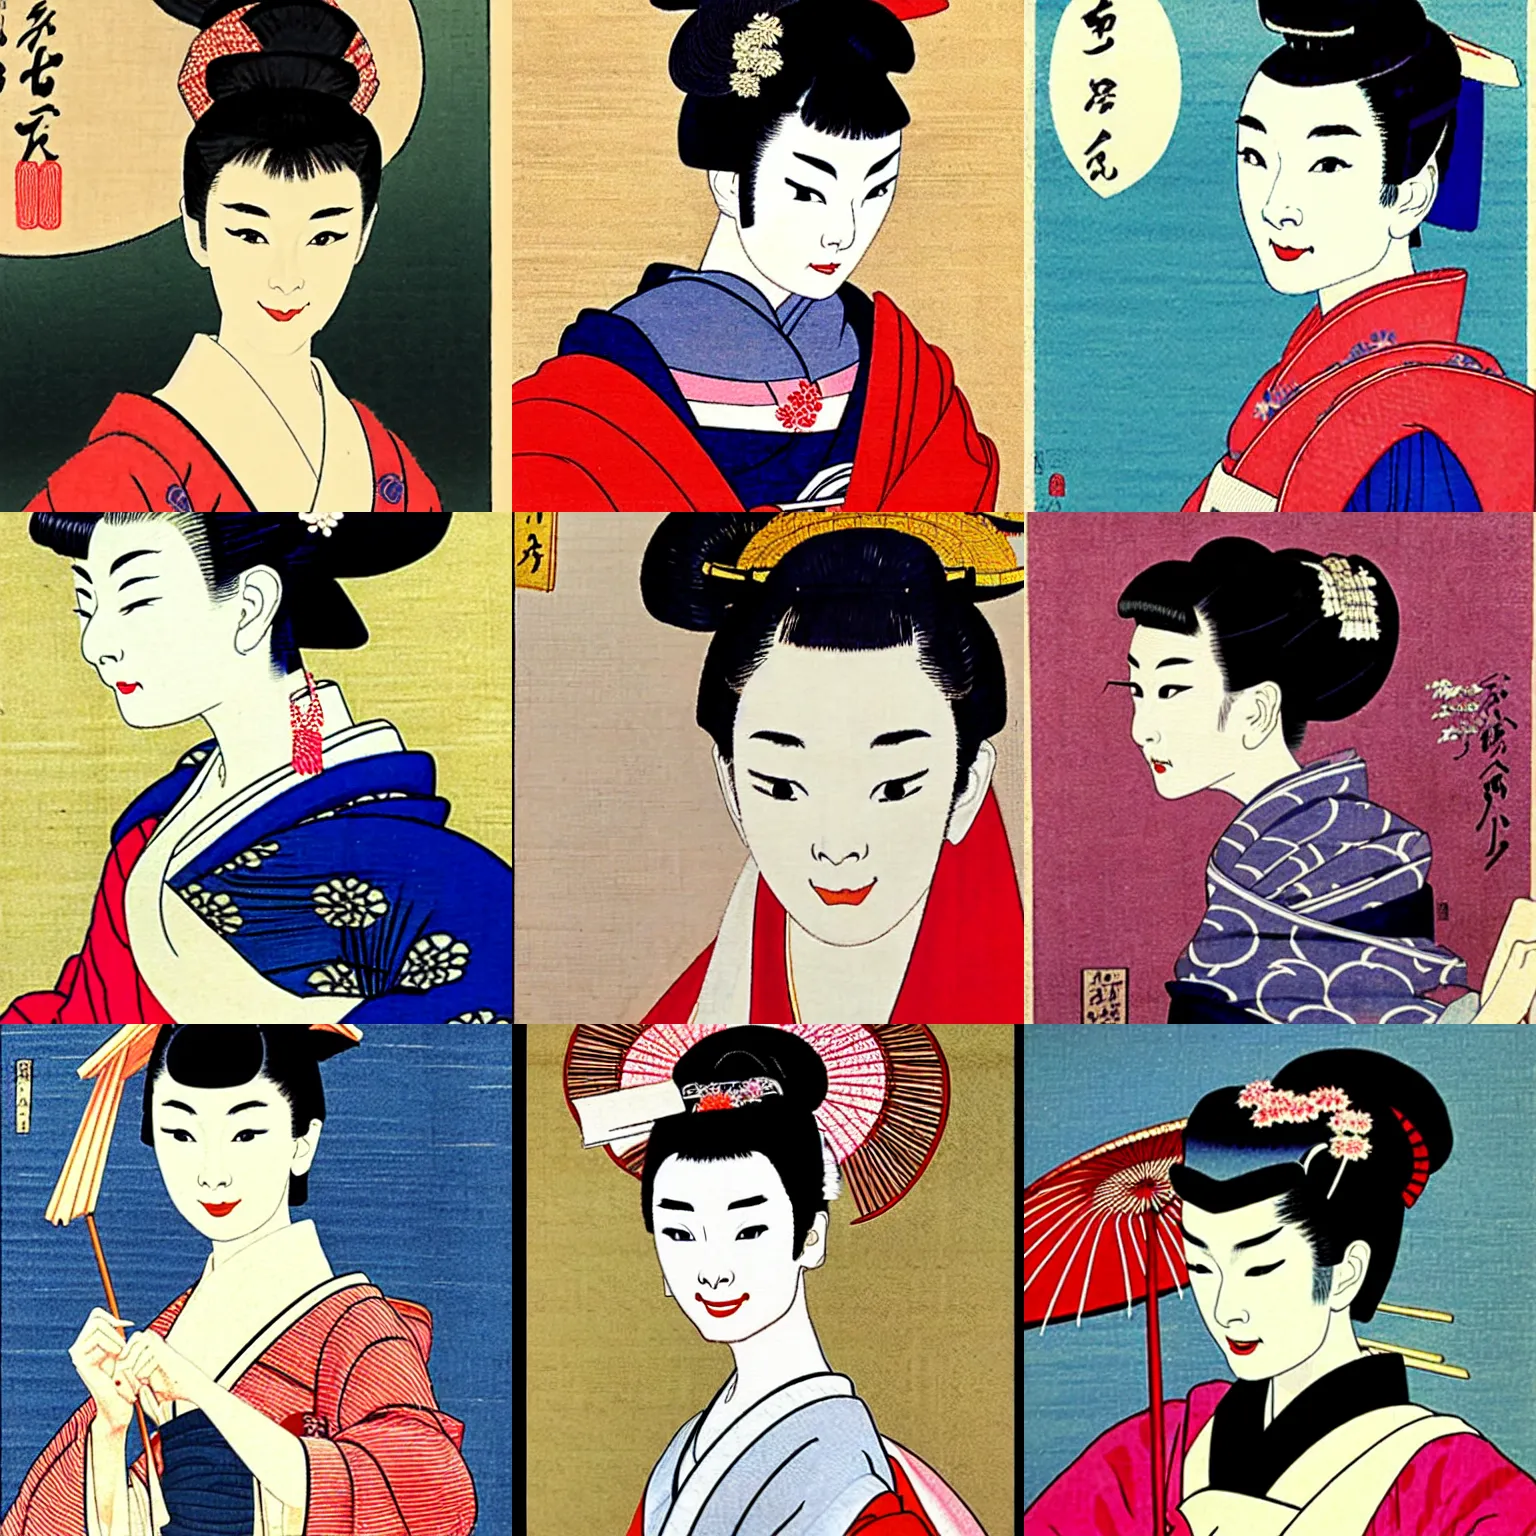 Prompt: audrey hepburn as maiko in ukiyo - e art painting by shimura tatsumi